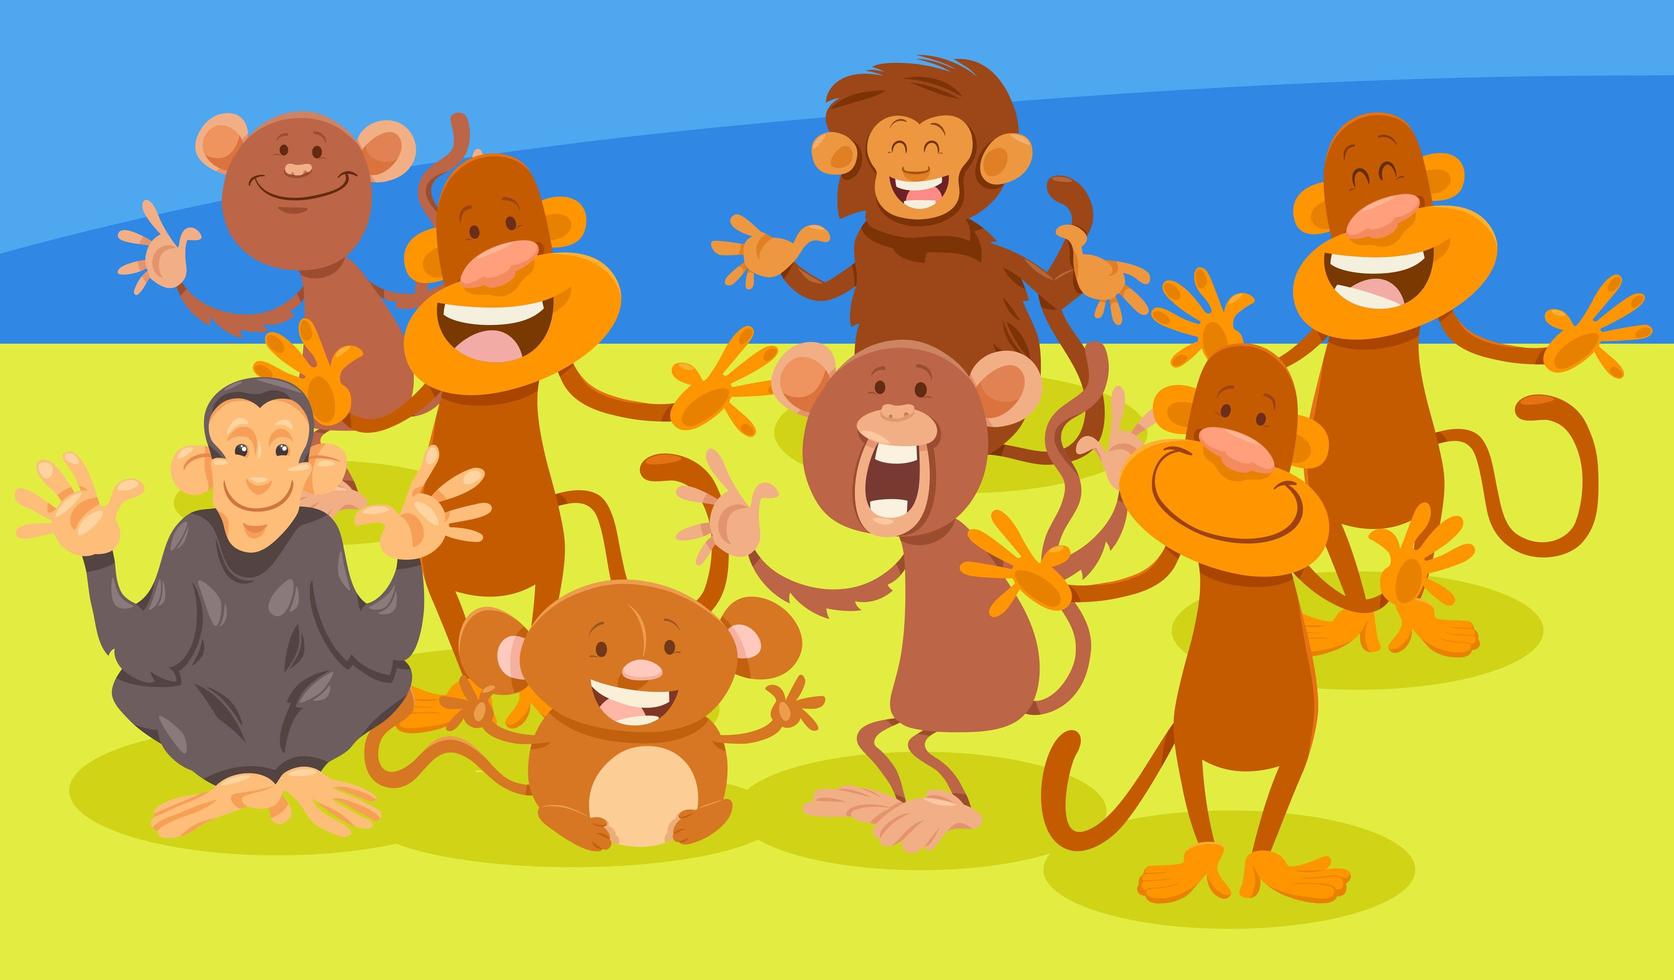 Cartoon monkeys animal characters group vector